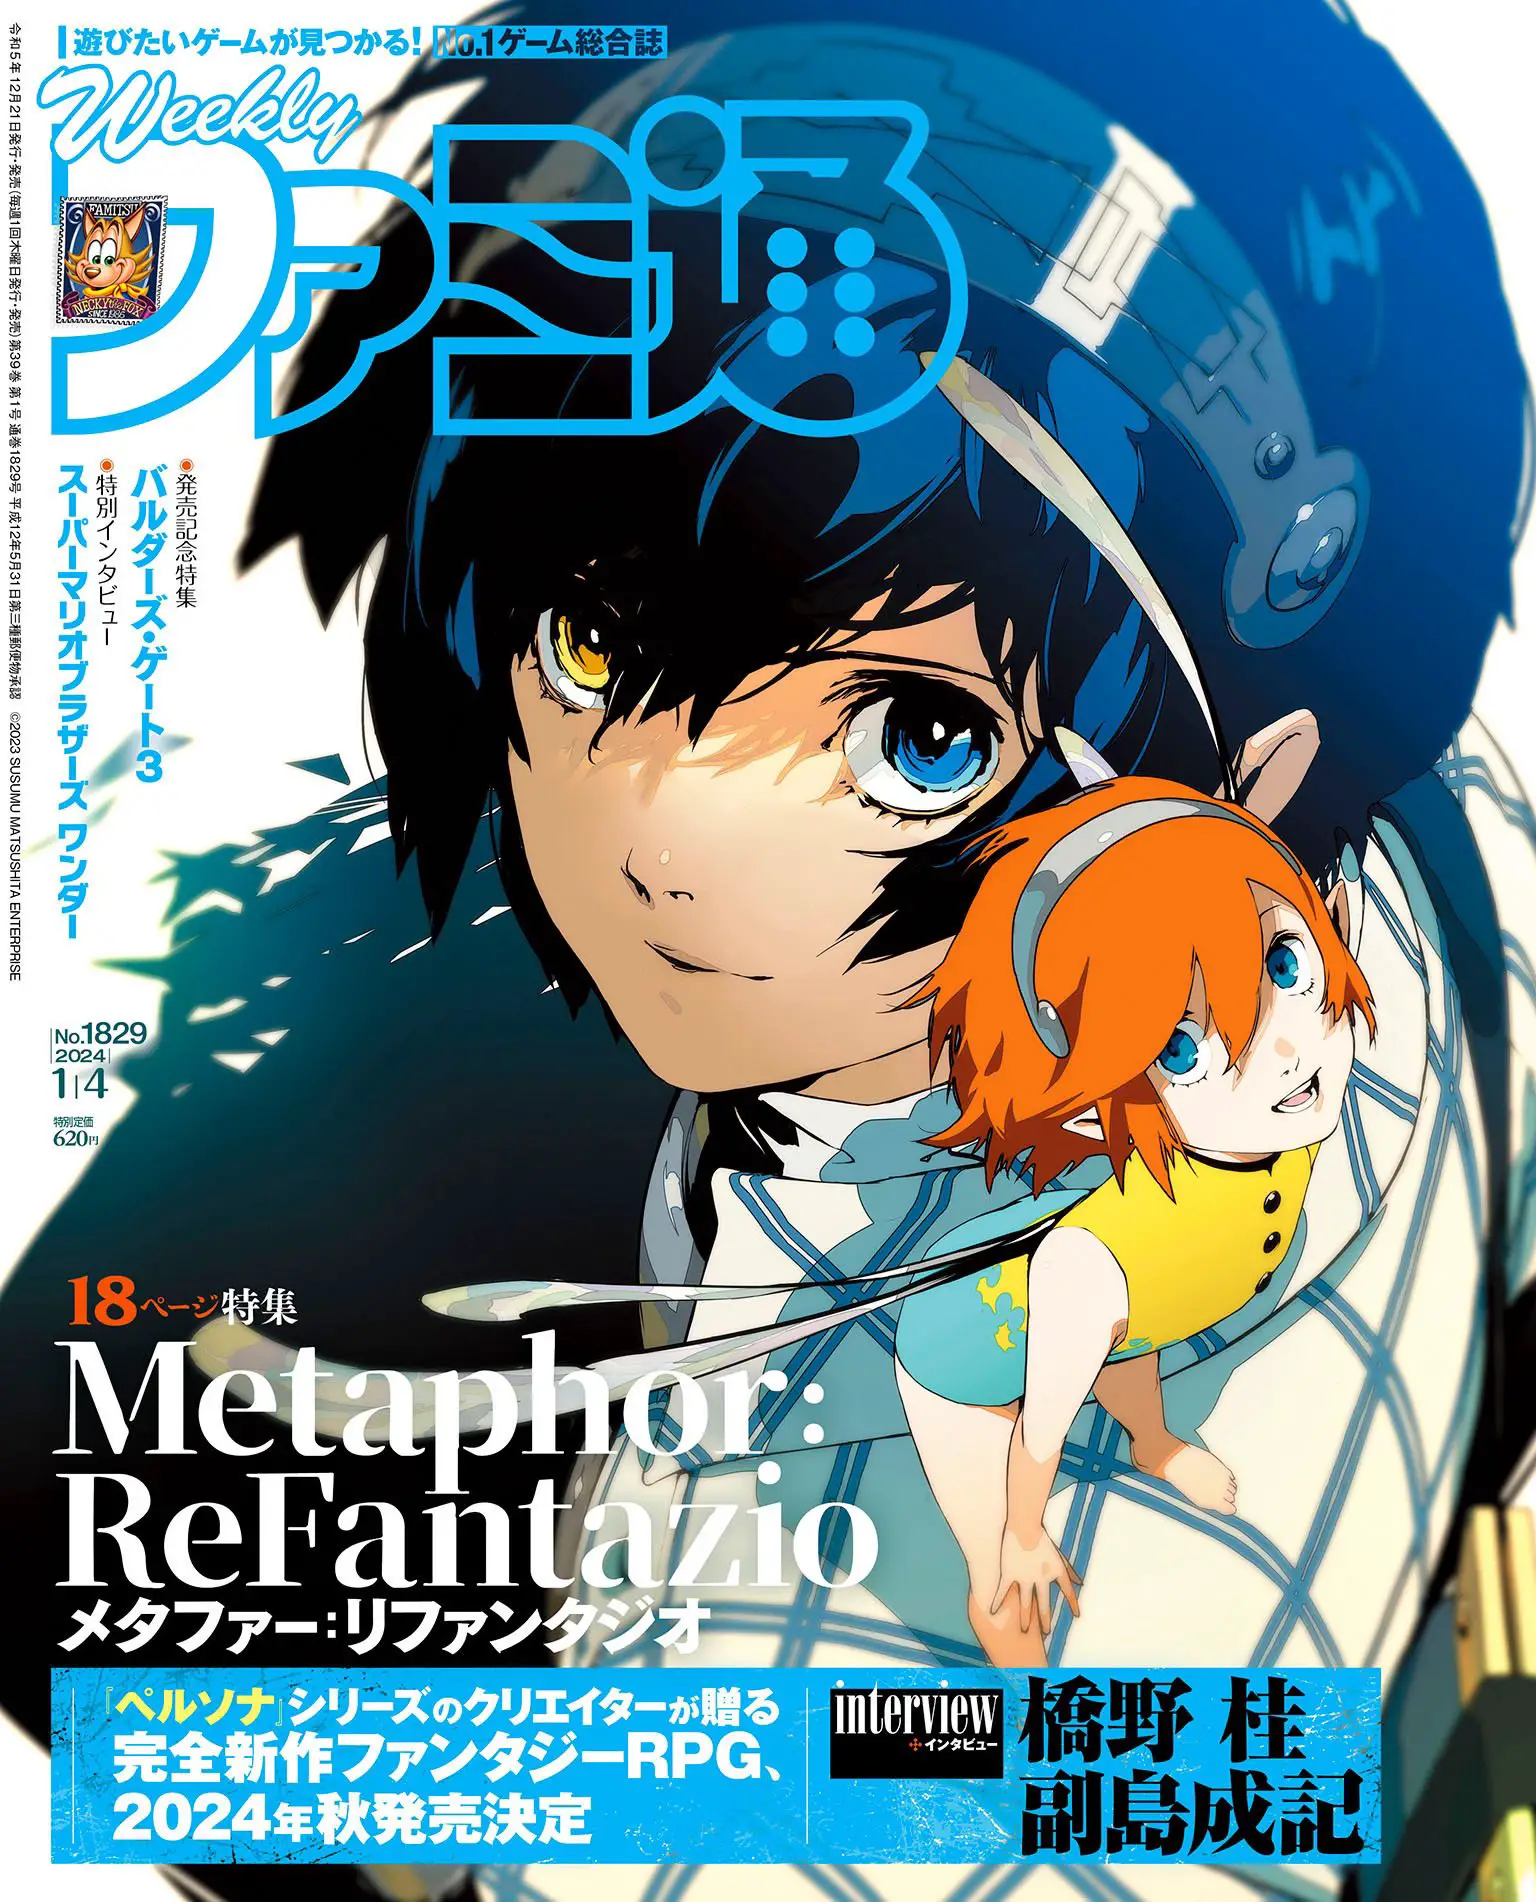 New Metaphor: ReFantazio Art Revealed via Famitsu; New Interview Later this Week